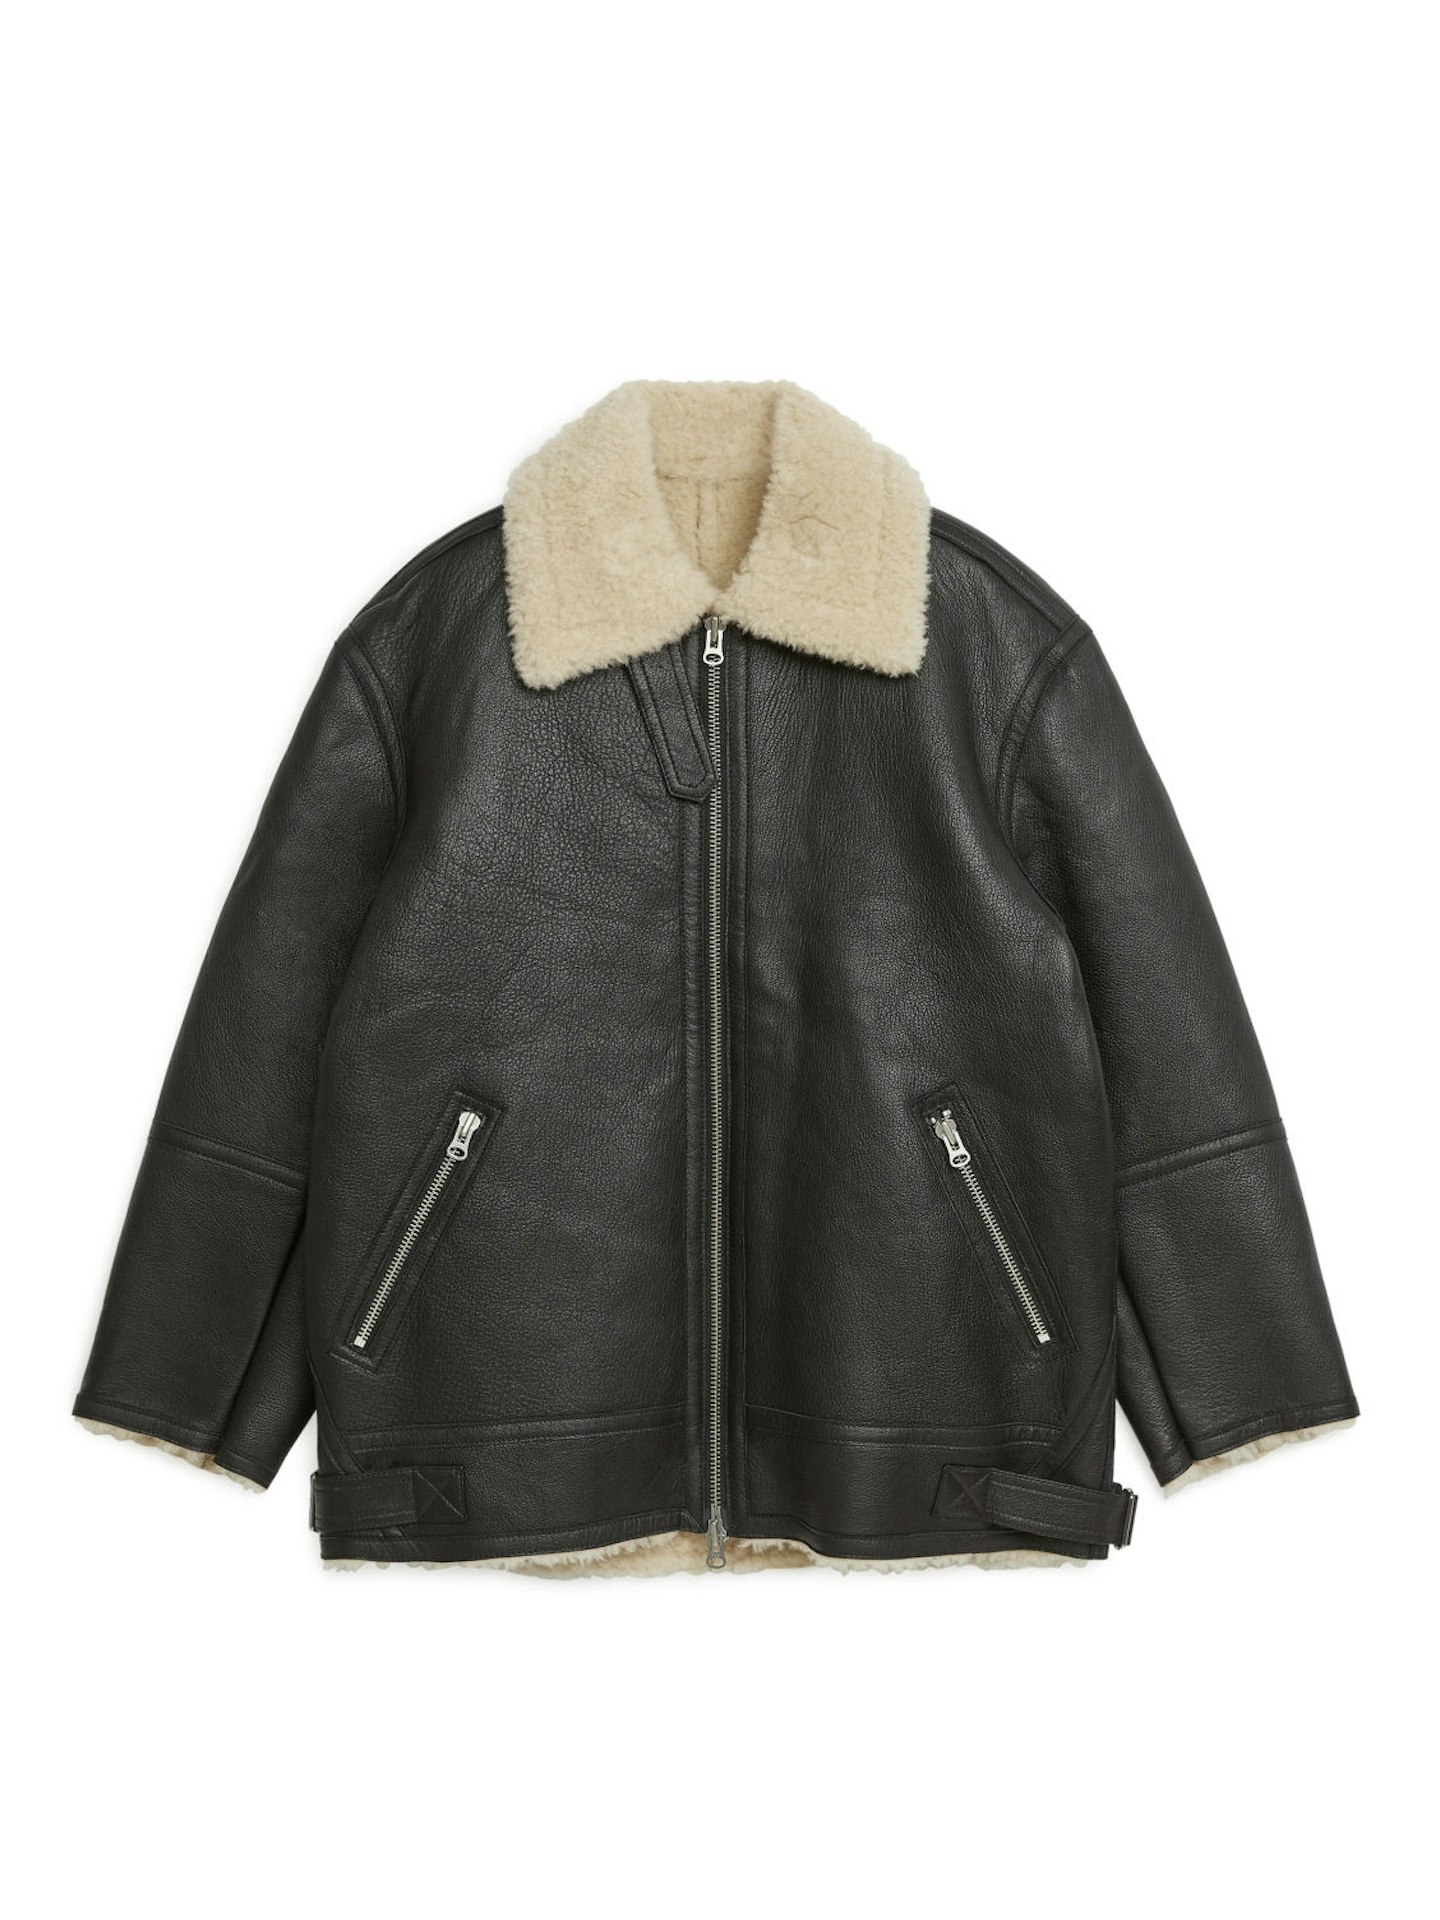 Arket, Piled-Lined Leather Jacket